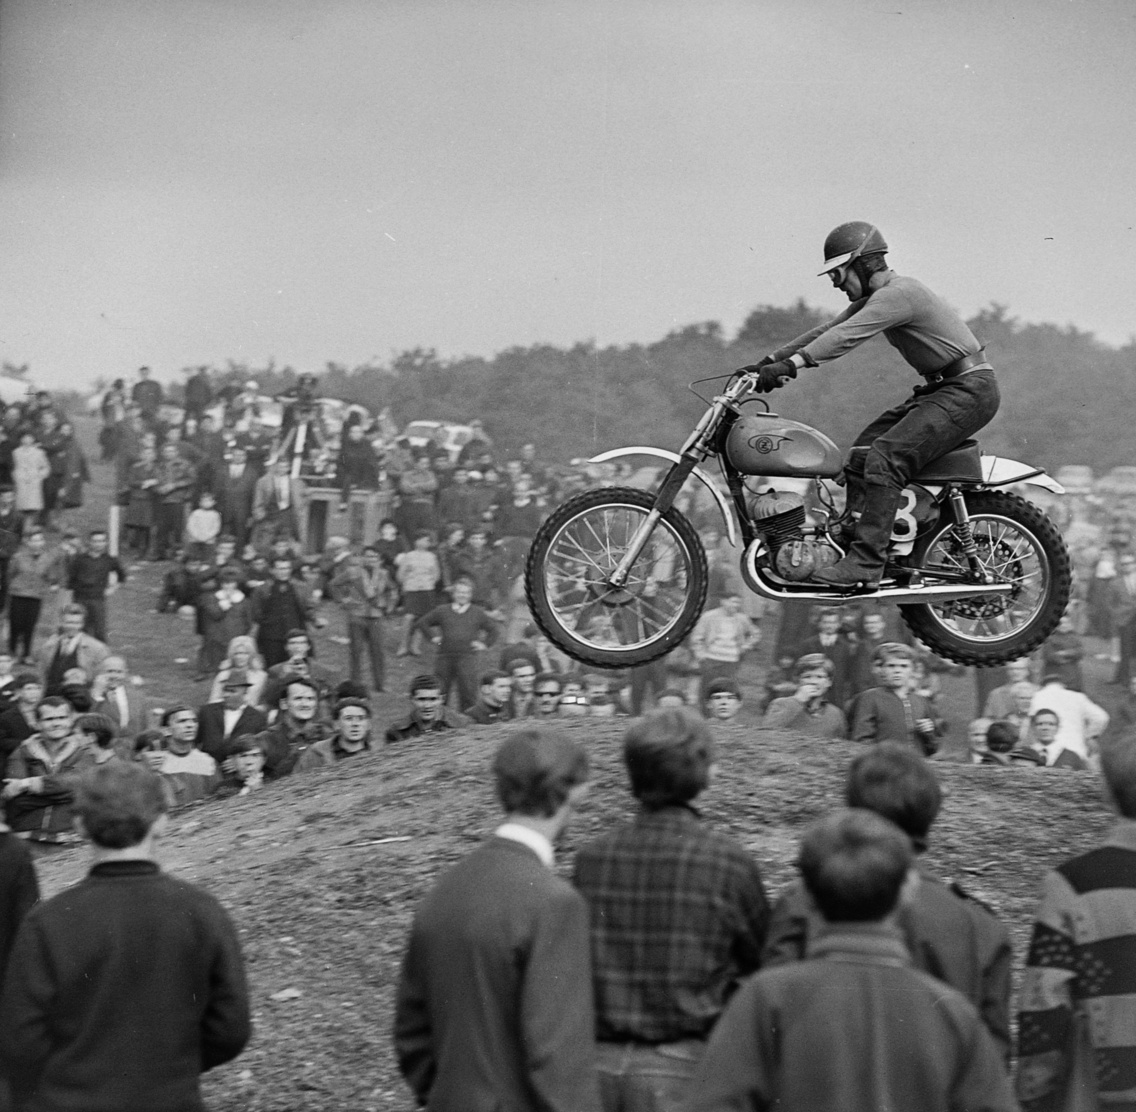 Motocross-verseny, Farkas-hegy, 1969